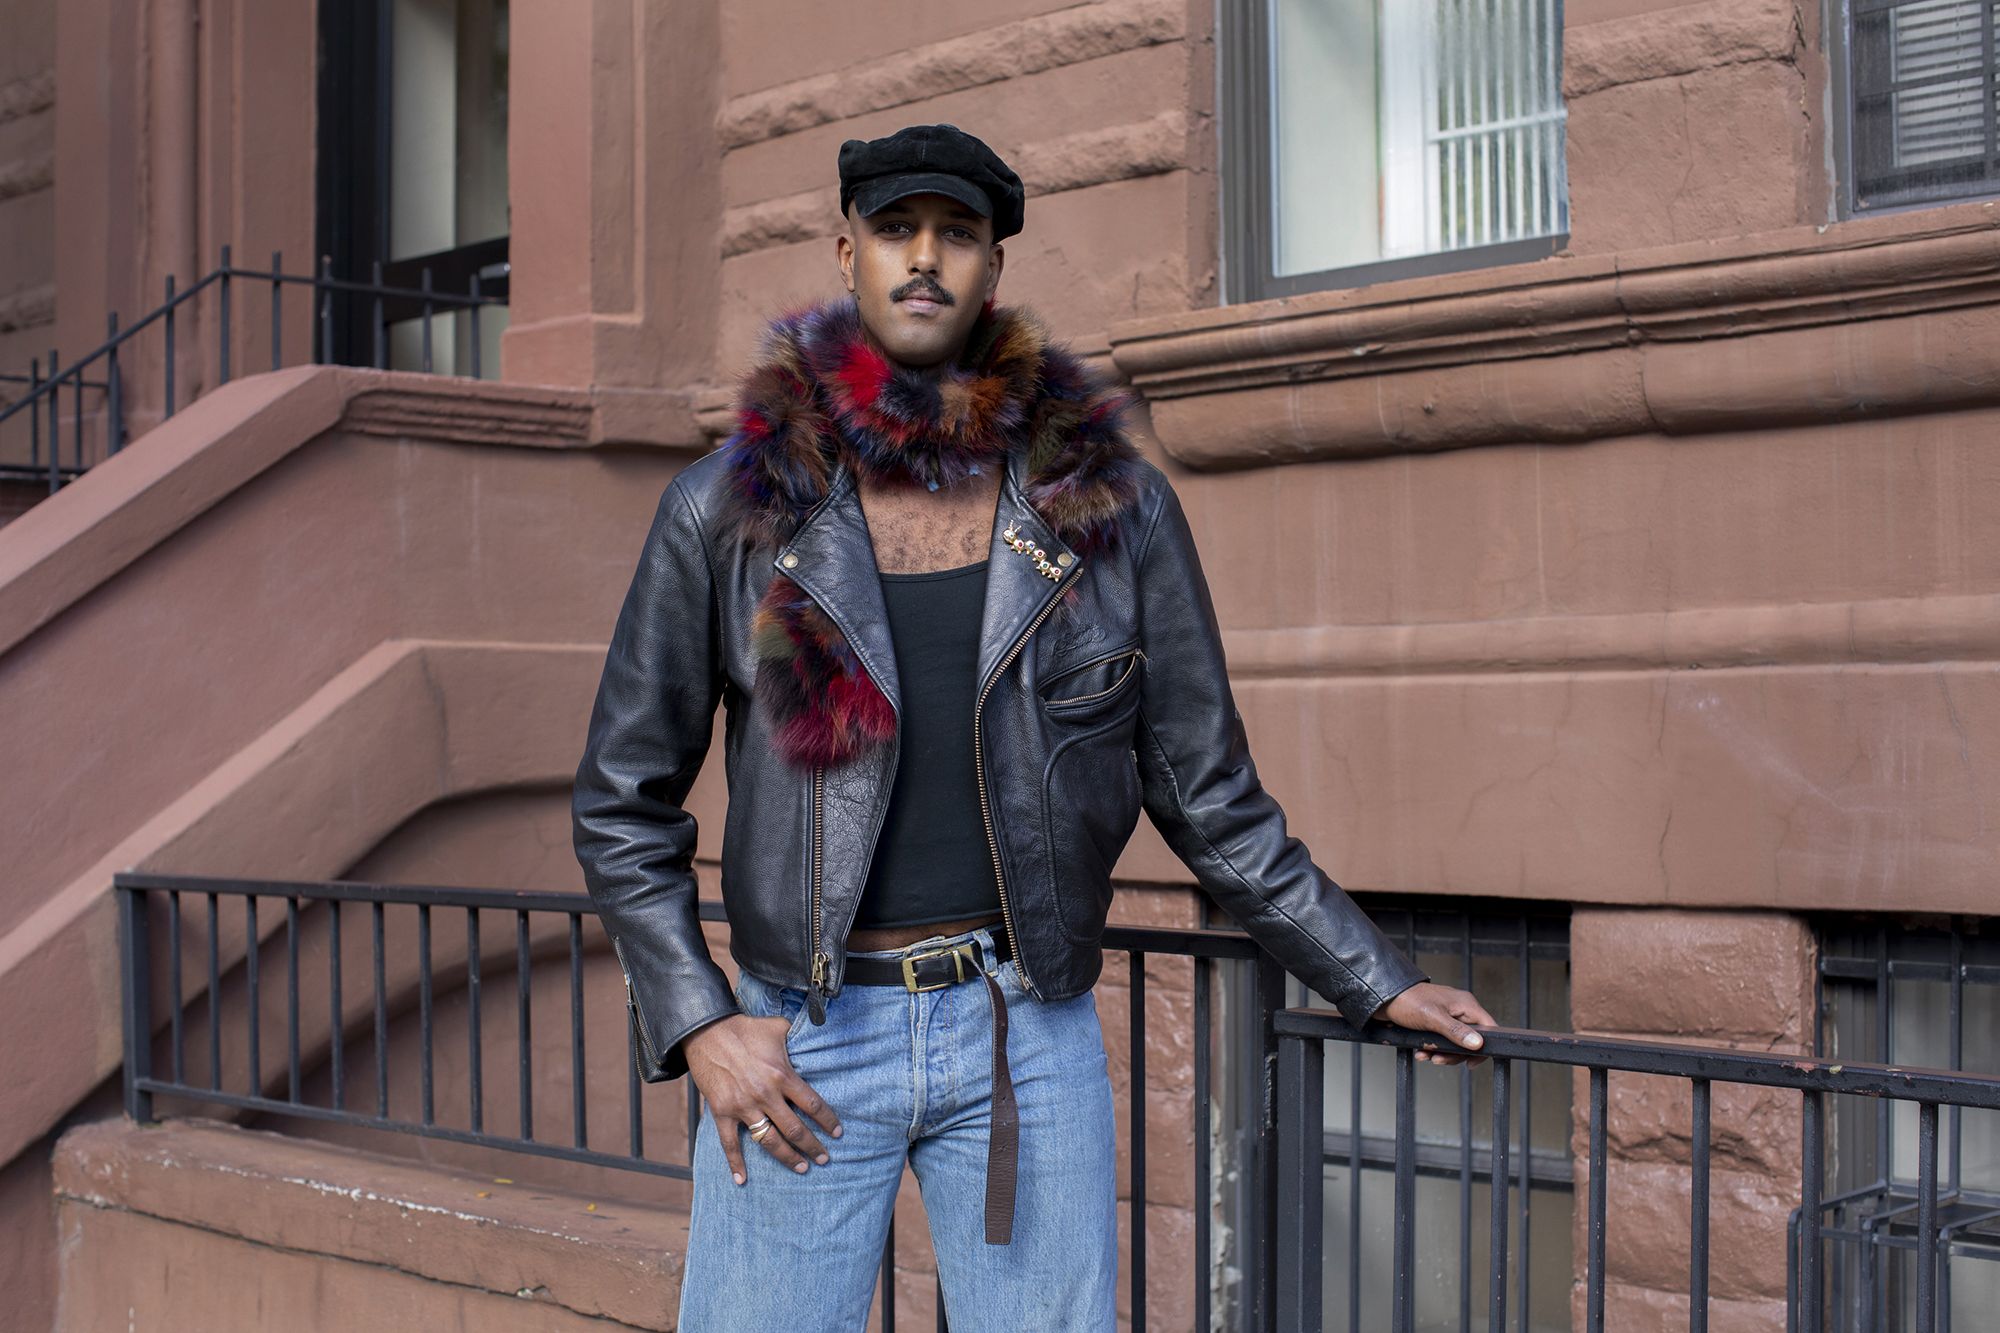 Adbul Warsame on the streets of New York.